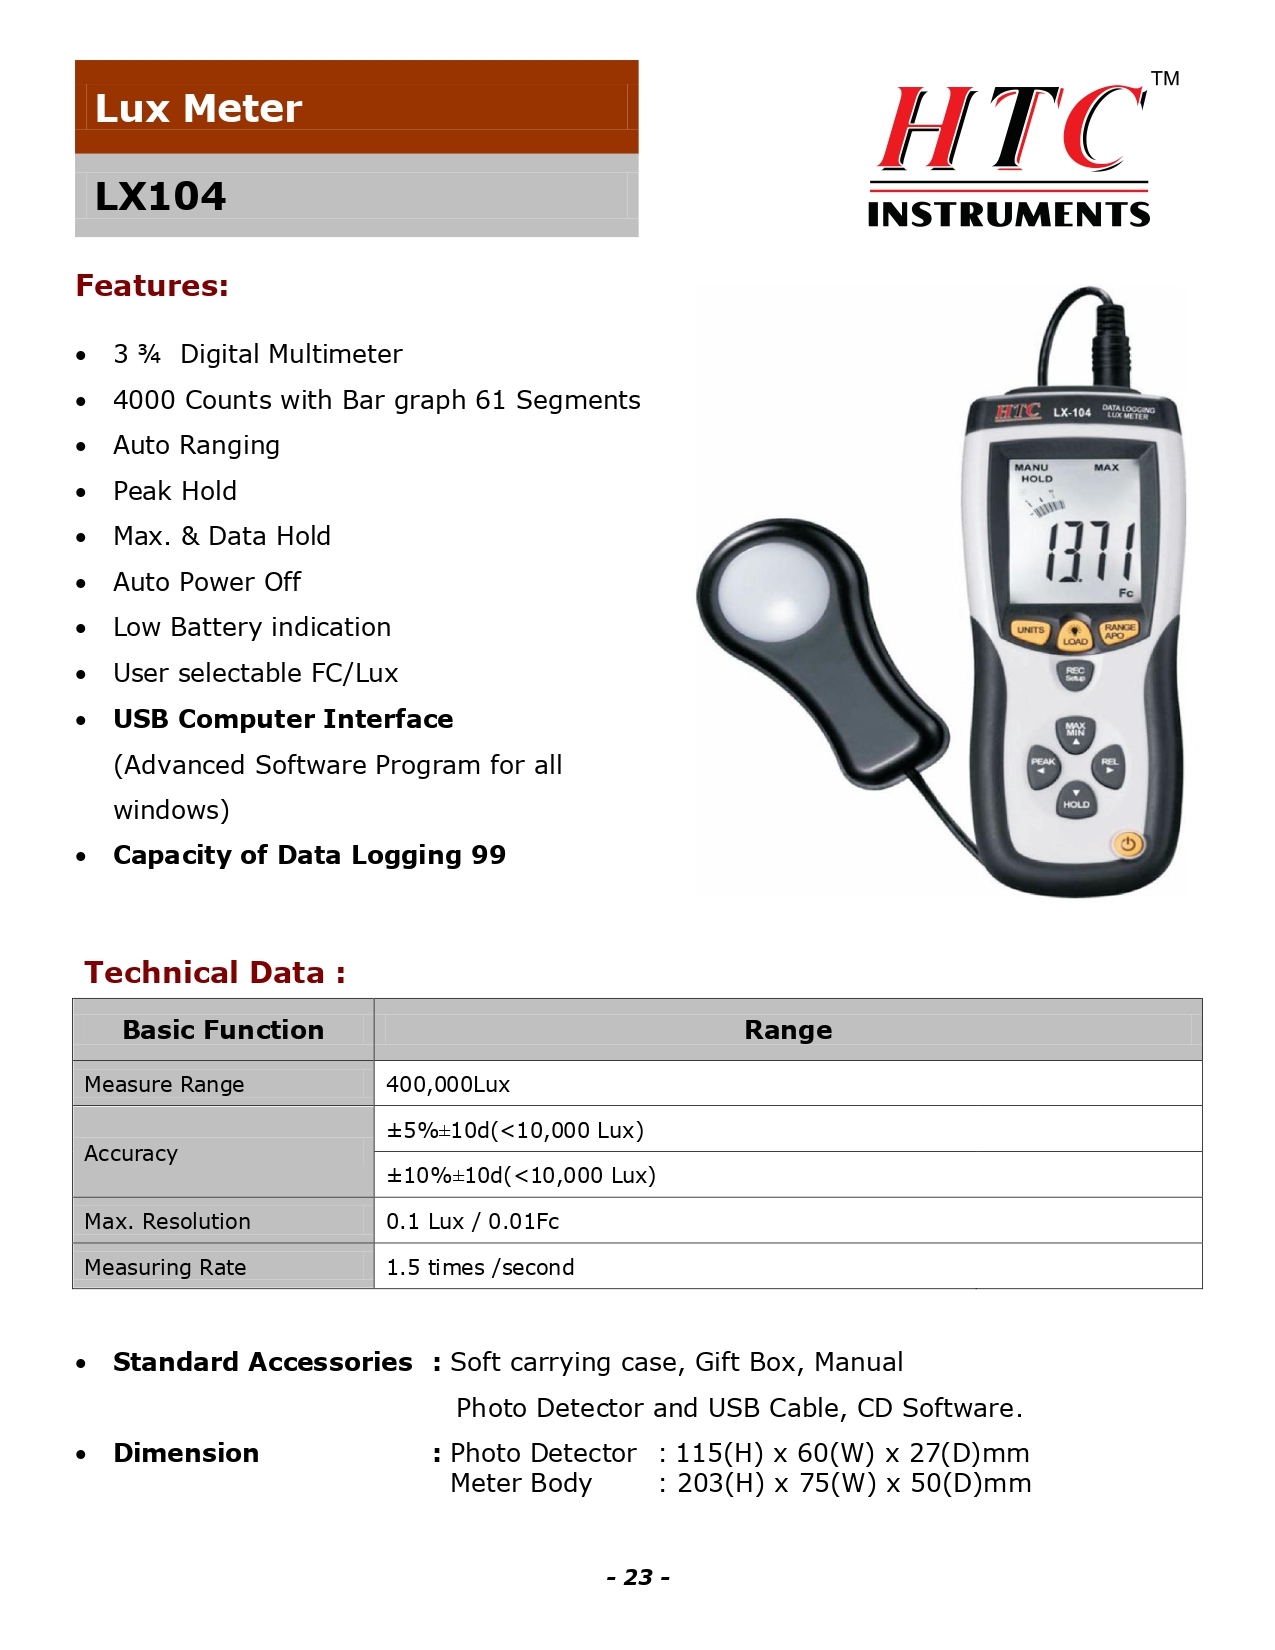 HTC LX-104 400,000 Digital Lux Meter (Data Logging)